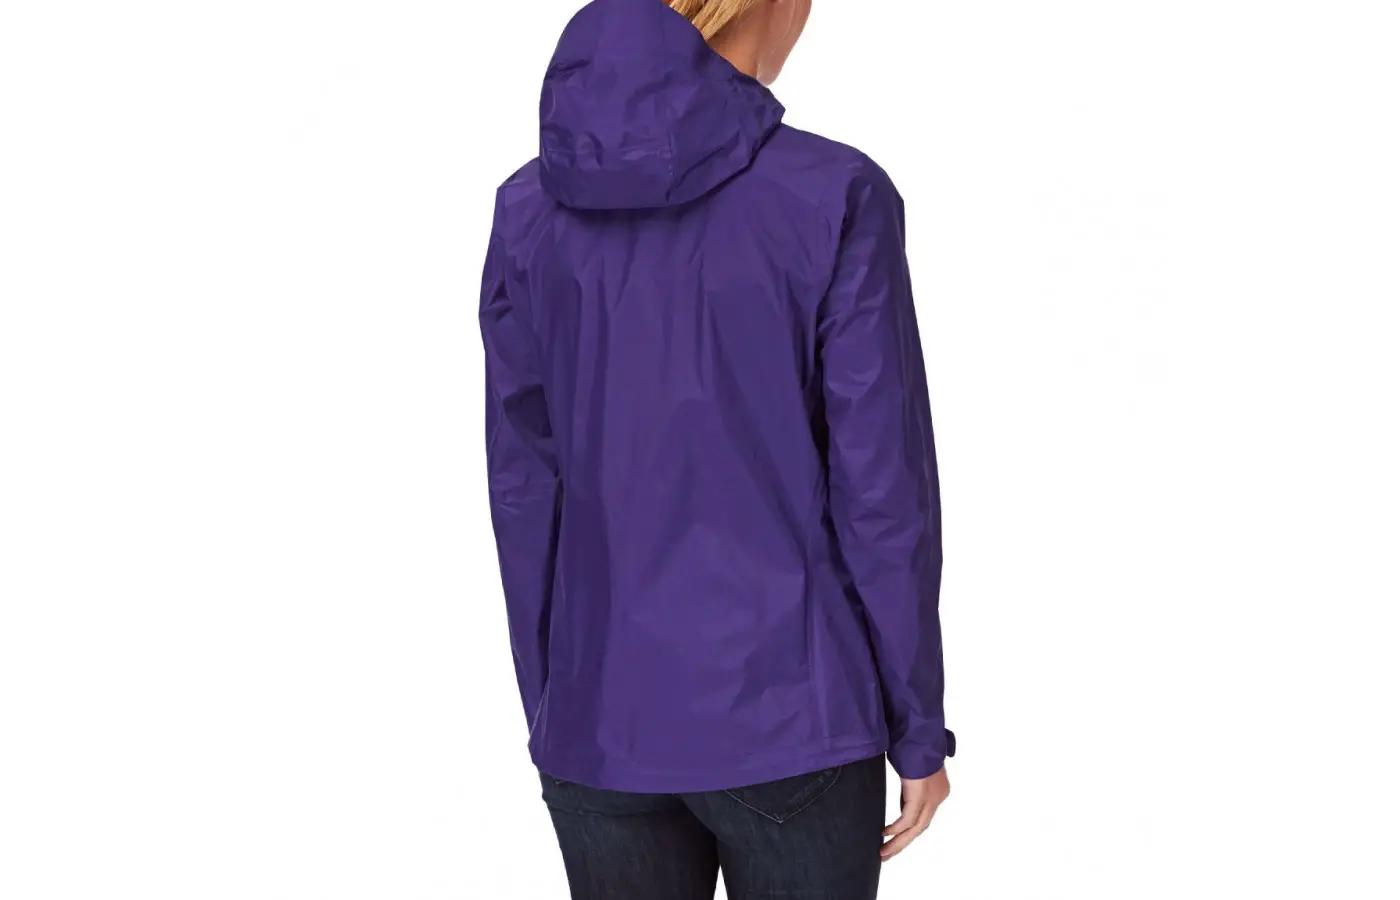 The jacket has an adjustable hood and wrists.